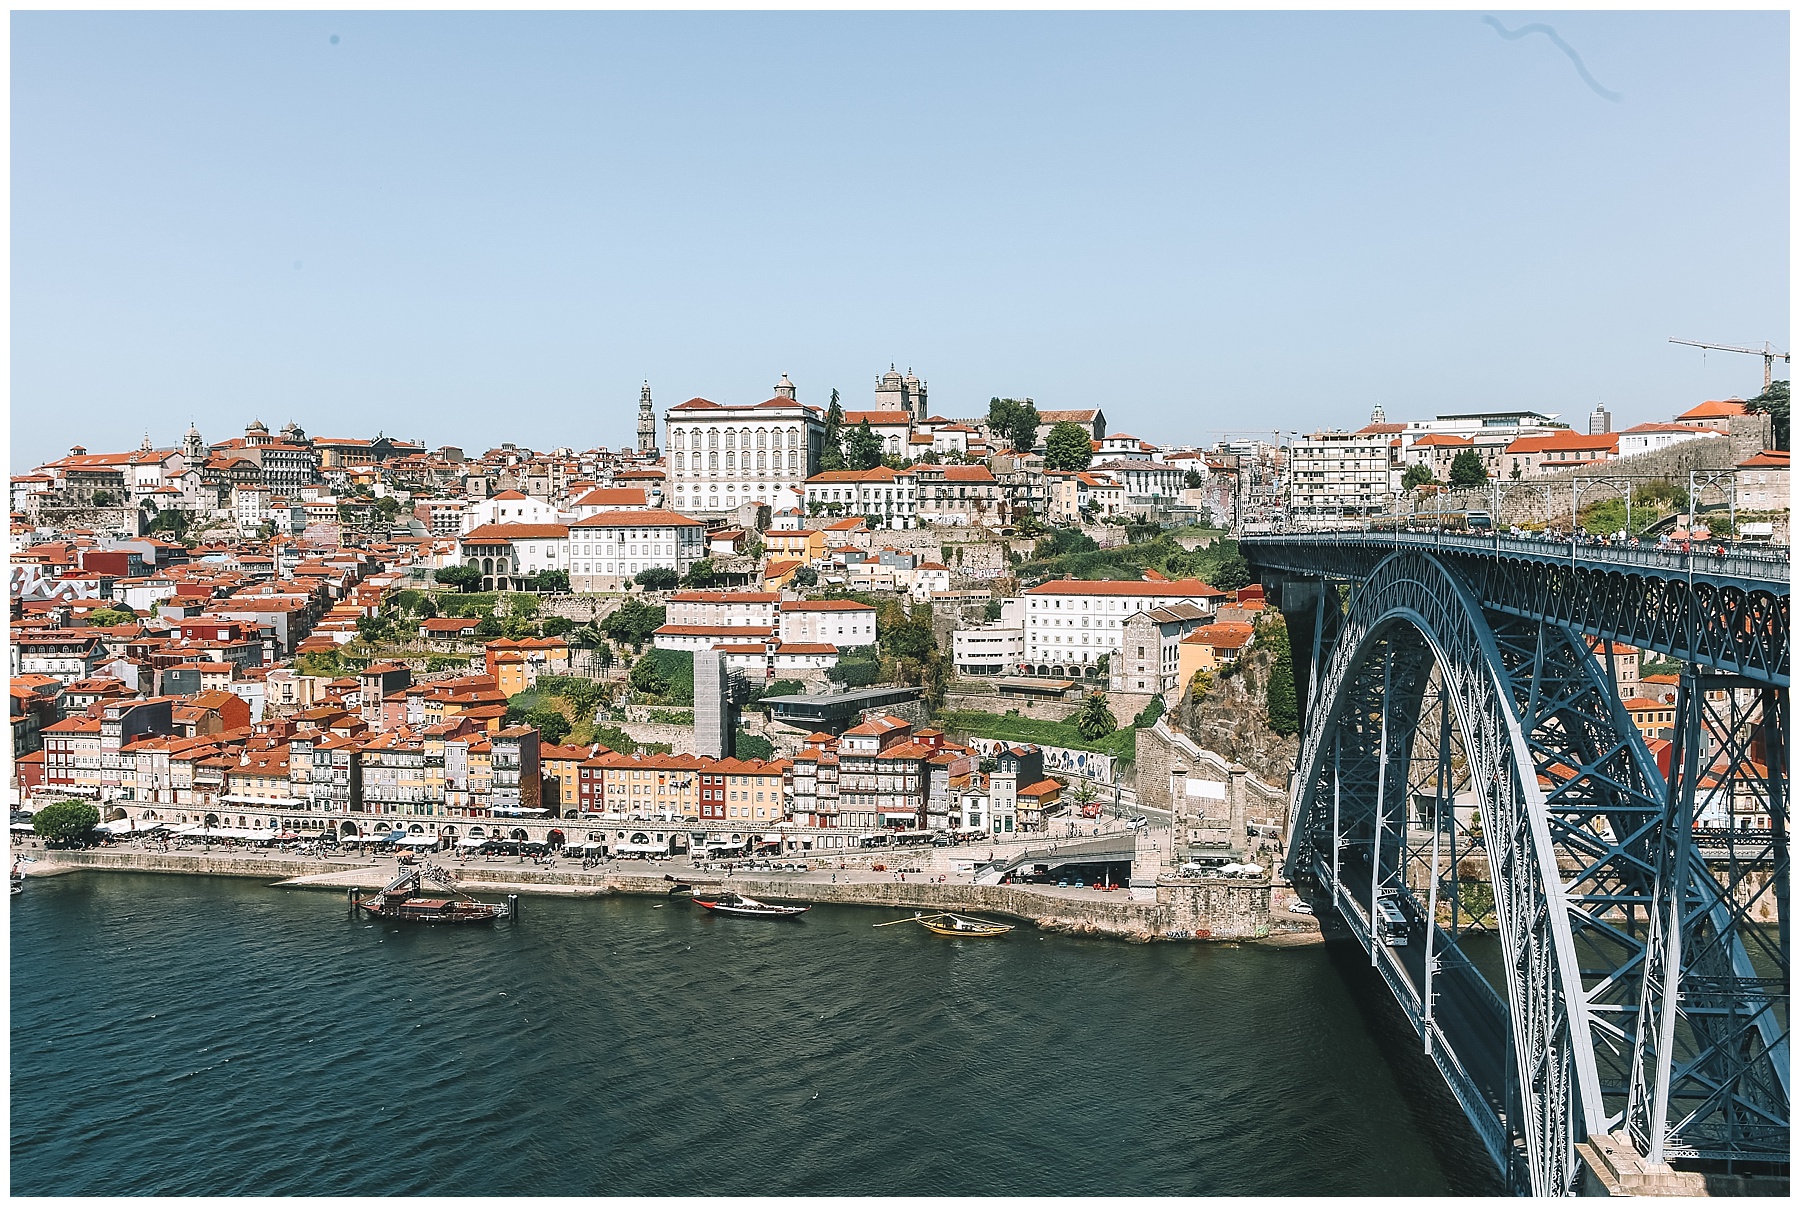 John Philp City Guide Porto Travel Blogger